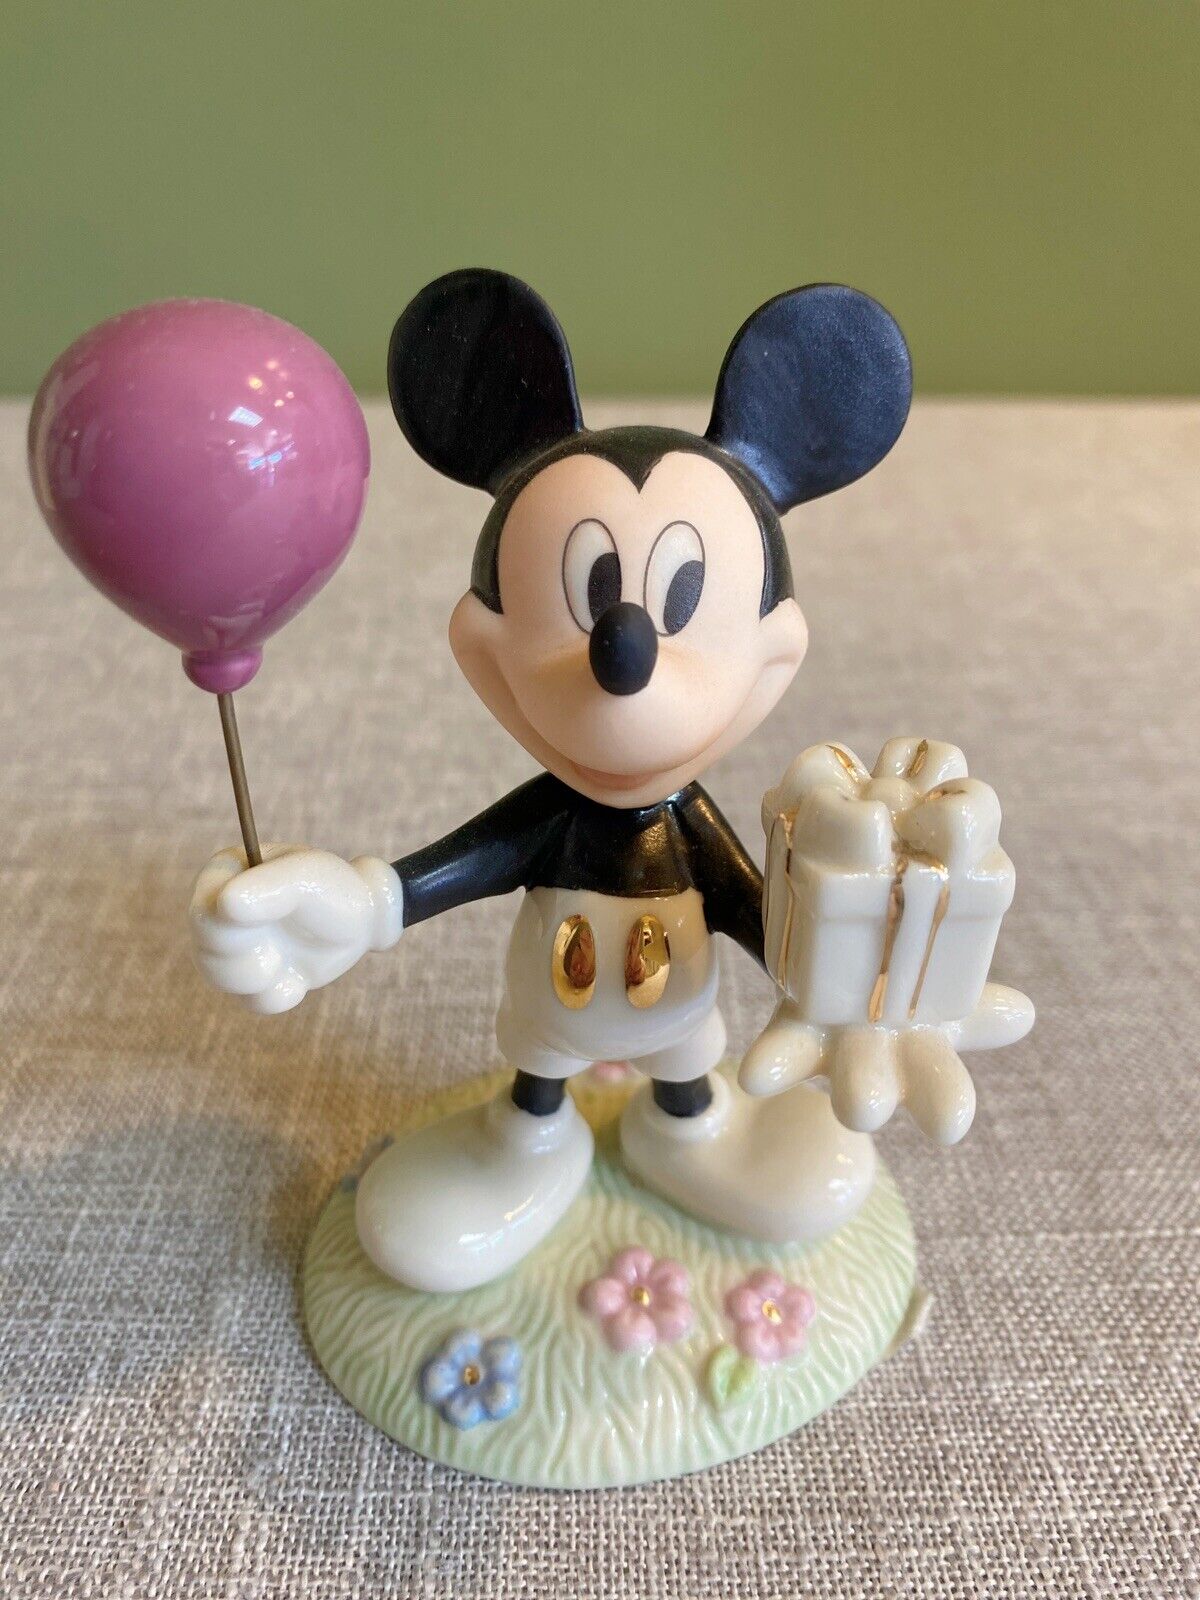 Lenox Mickey Figurine “Mickey’s Birthday Gift” 802879 NIB